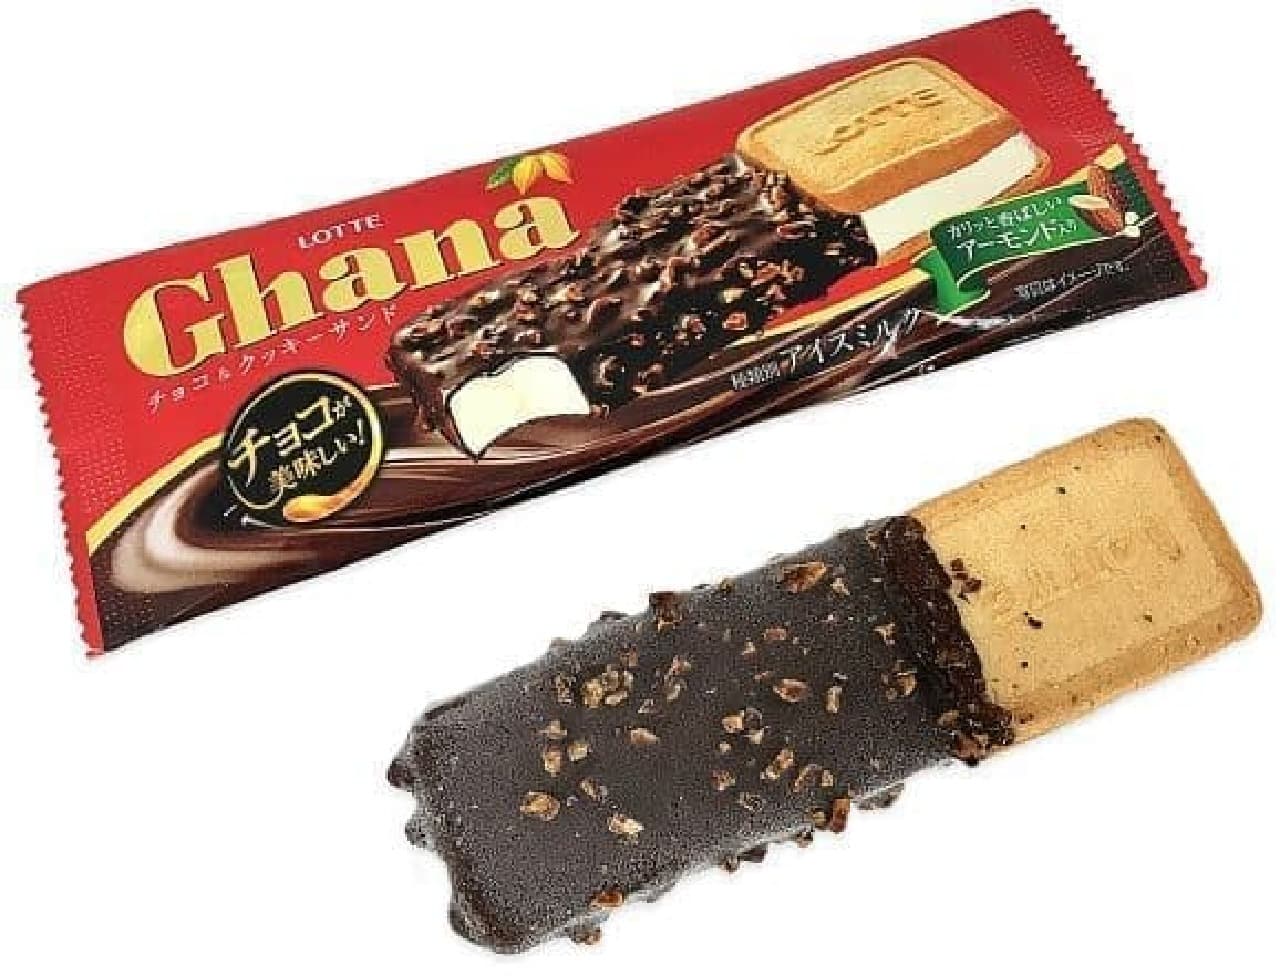 7-ELEVEN "Lotte Ghana Chocolate & Cookie Sandwich"